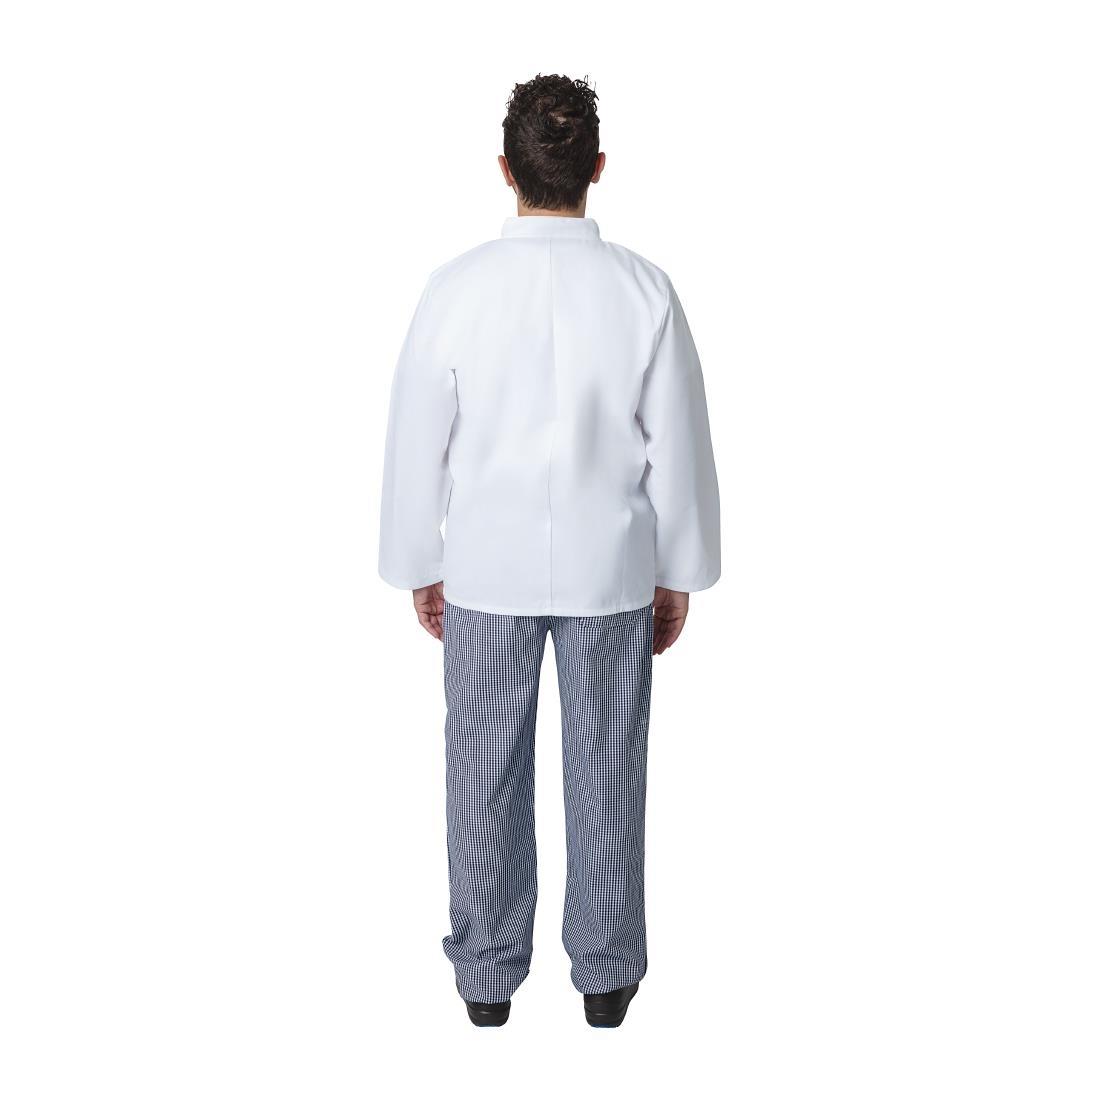 Whites Vegas Unisex Chefs Jacket Long Sleeve White L - A134-L  - 5